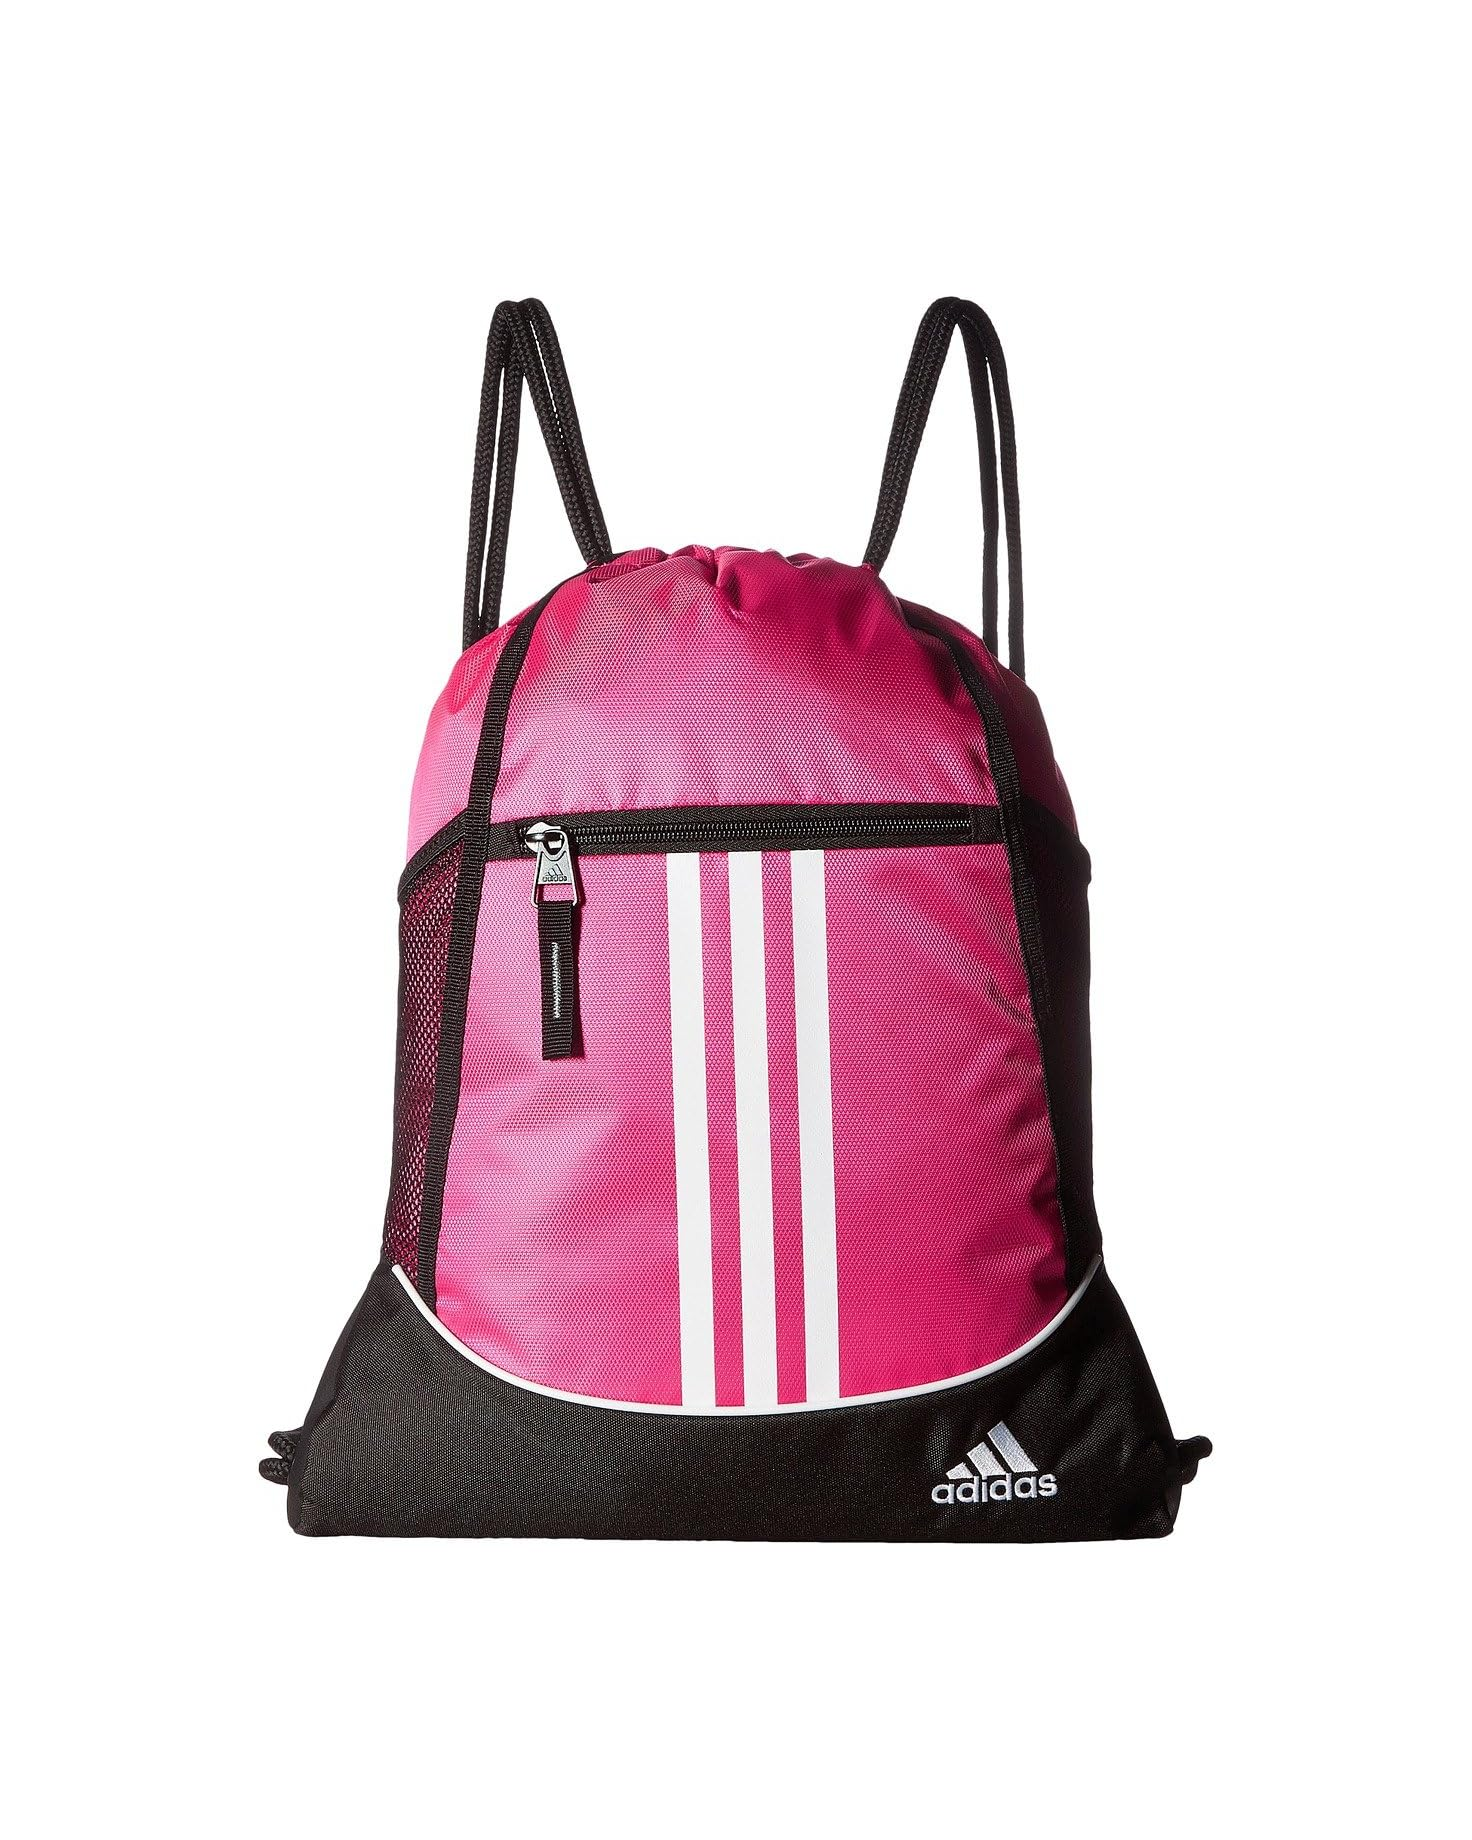 Adidas Alliance II Sackpack Team Shock Pink